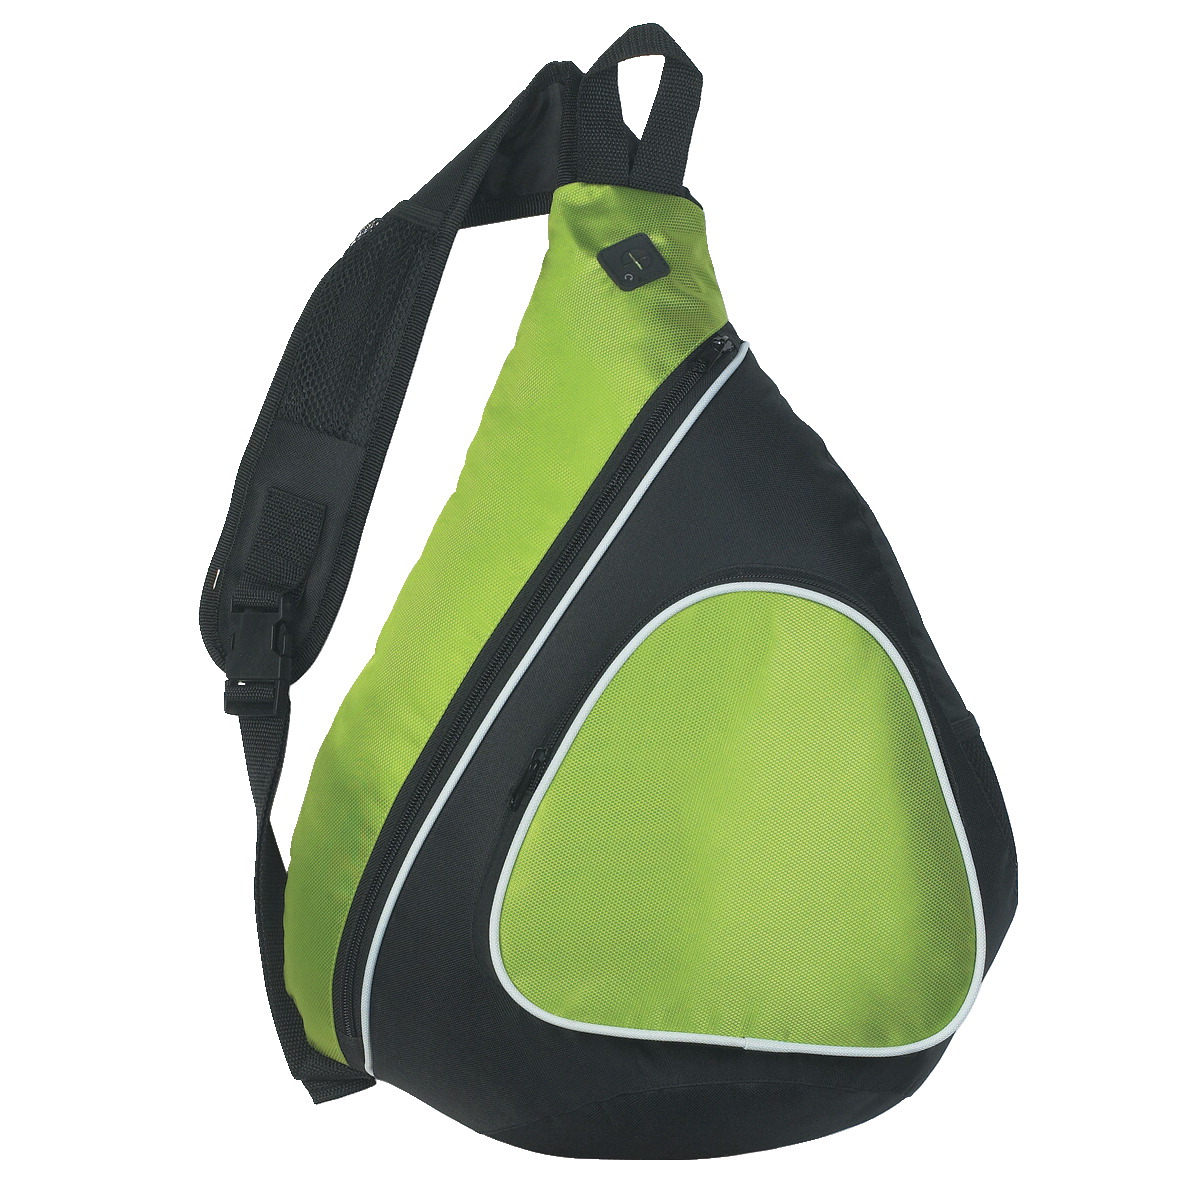 13 X 19 In. Sling Backpack, Polyester & Nylon - Black & Lime Green